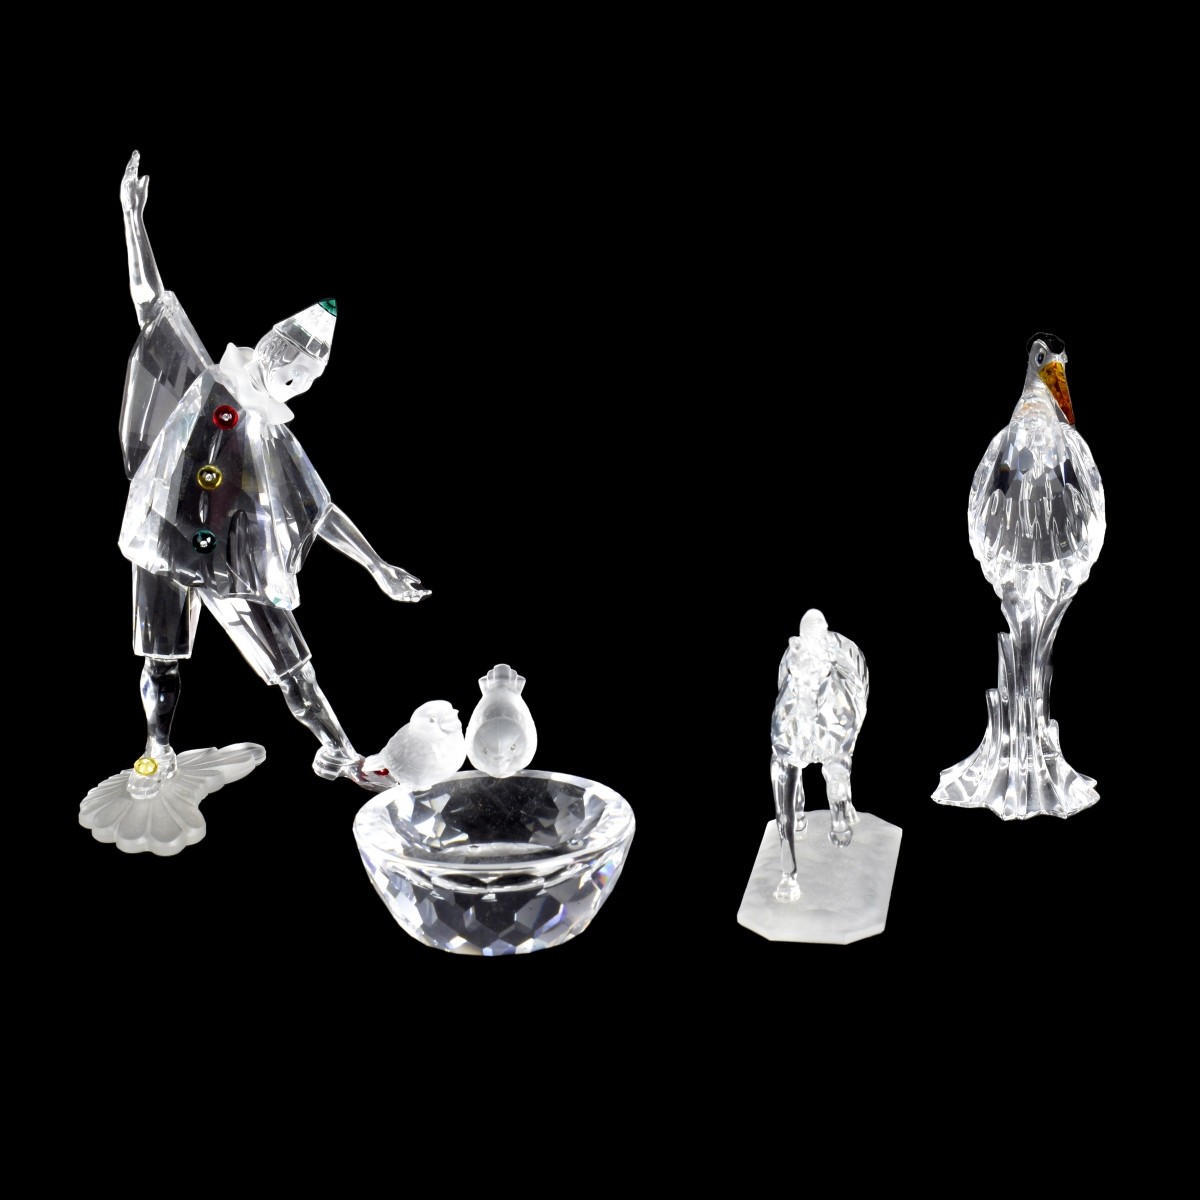 Four Swarovski Crystal Figurines